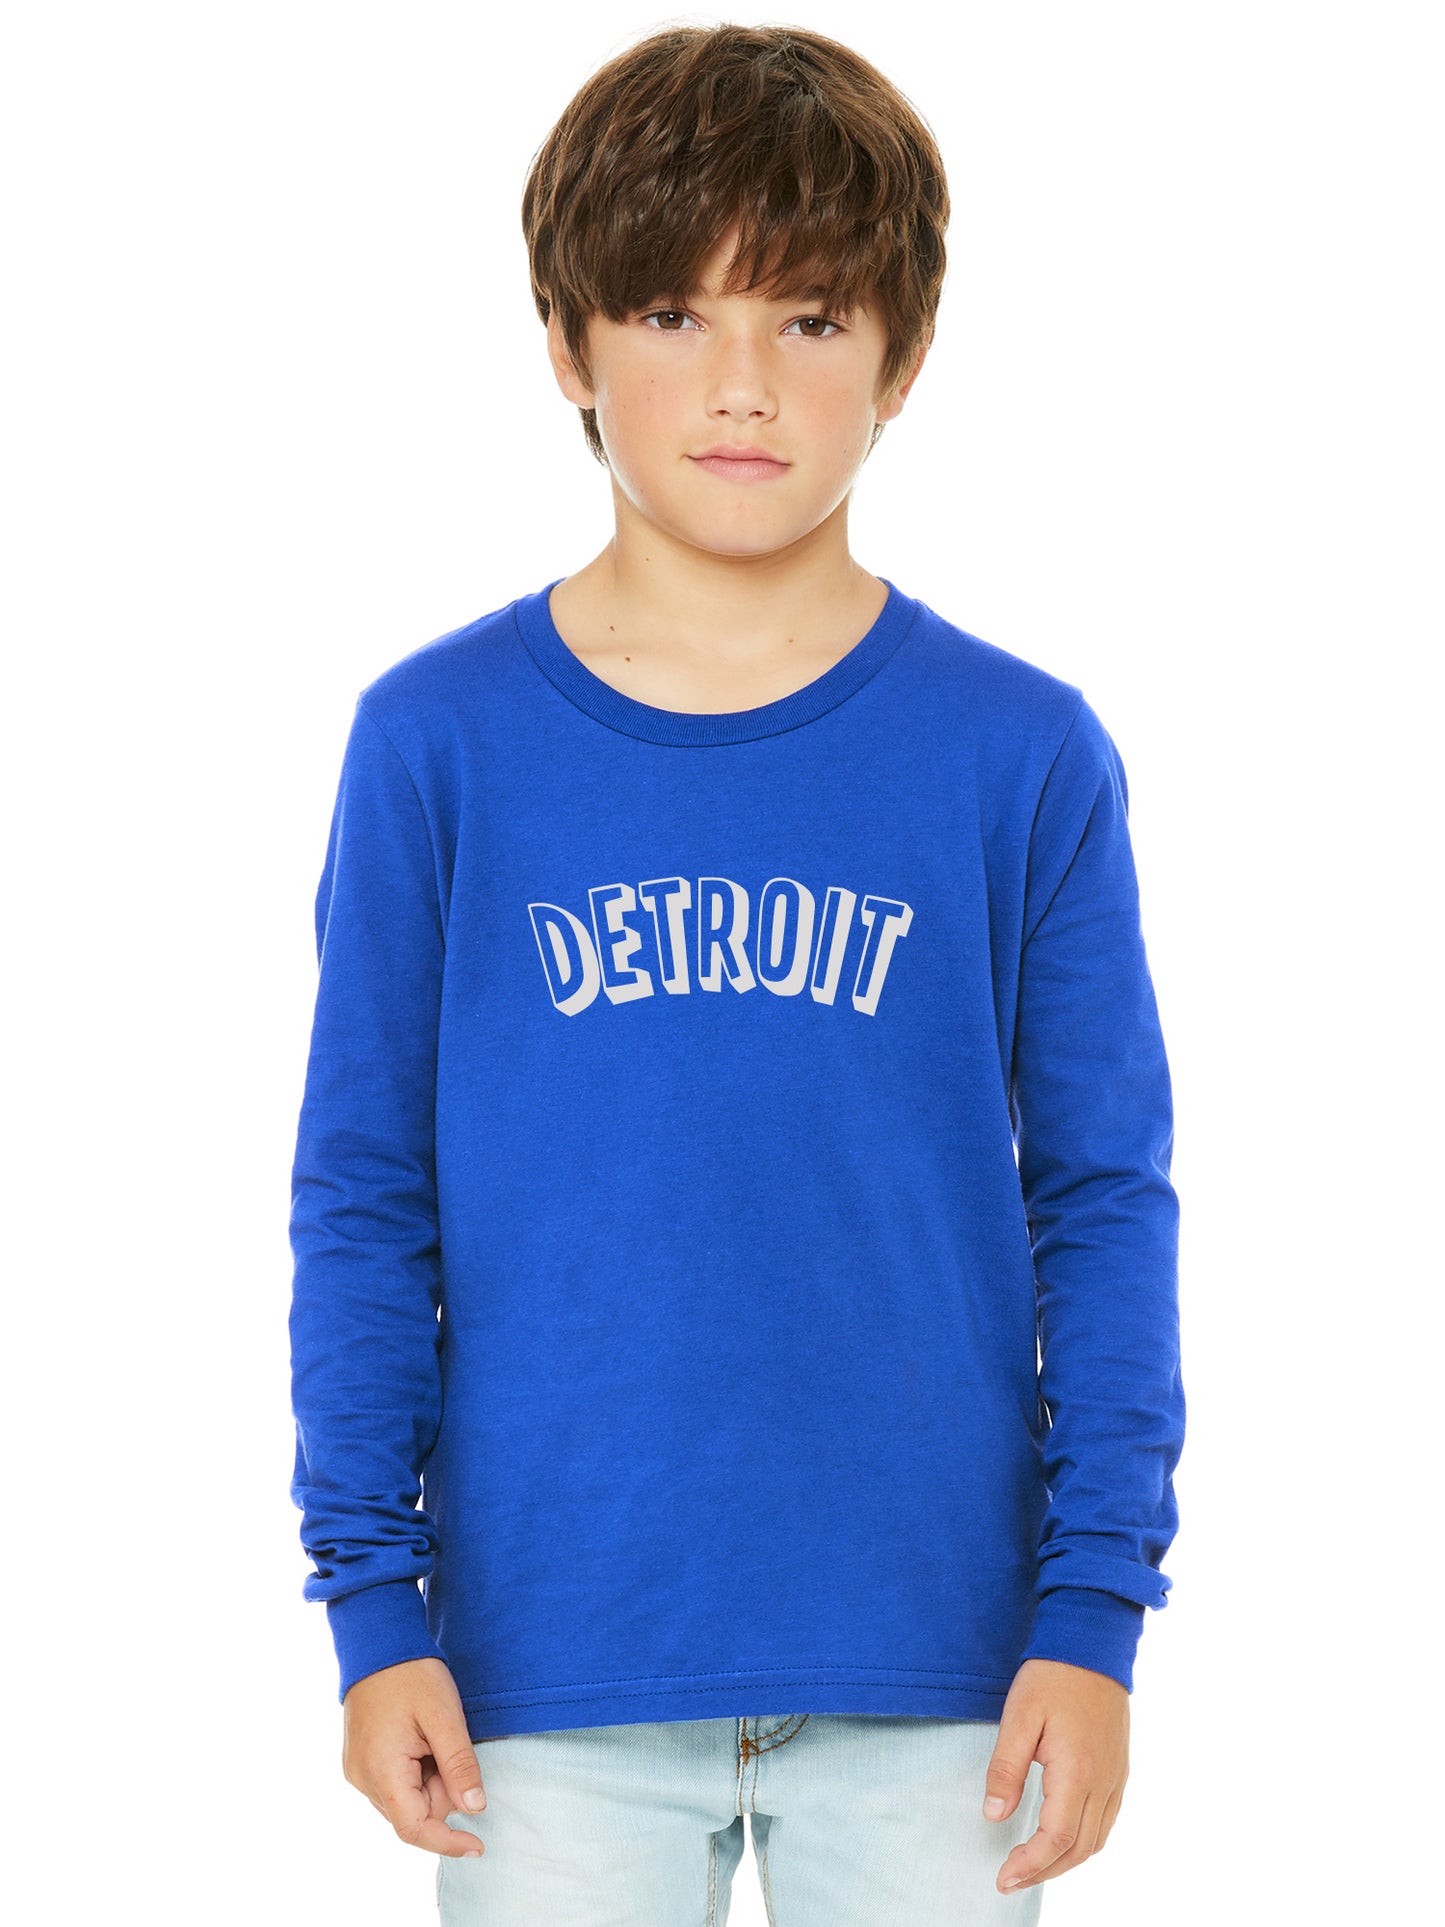 Daxton Youth Long Sleeve Detroit Basic Tshirt